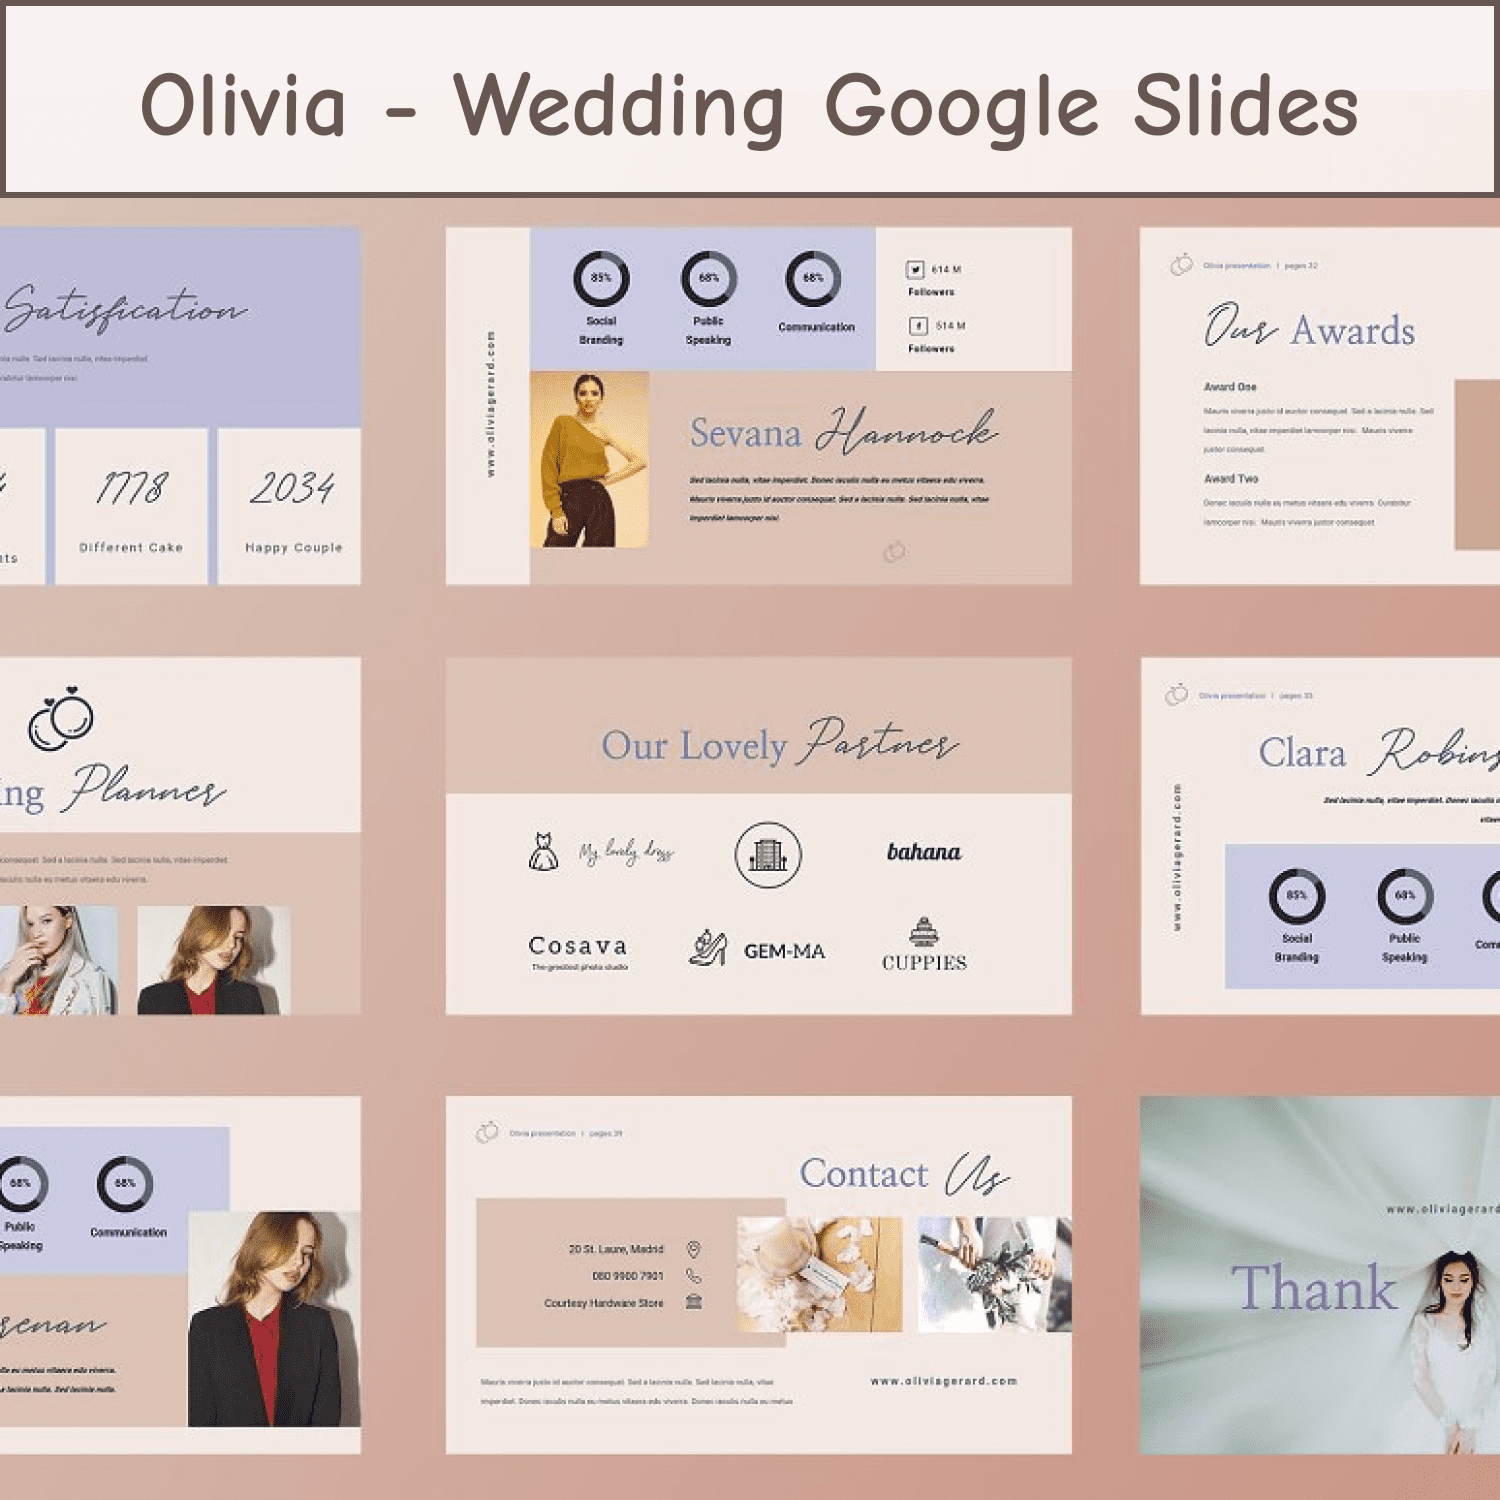 Olivia - Wedding Google Slides.